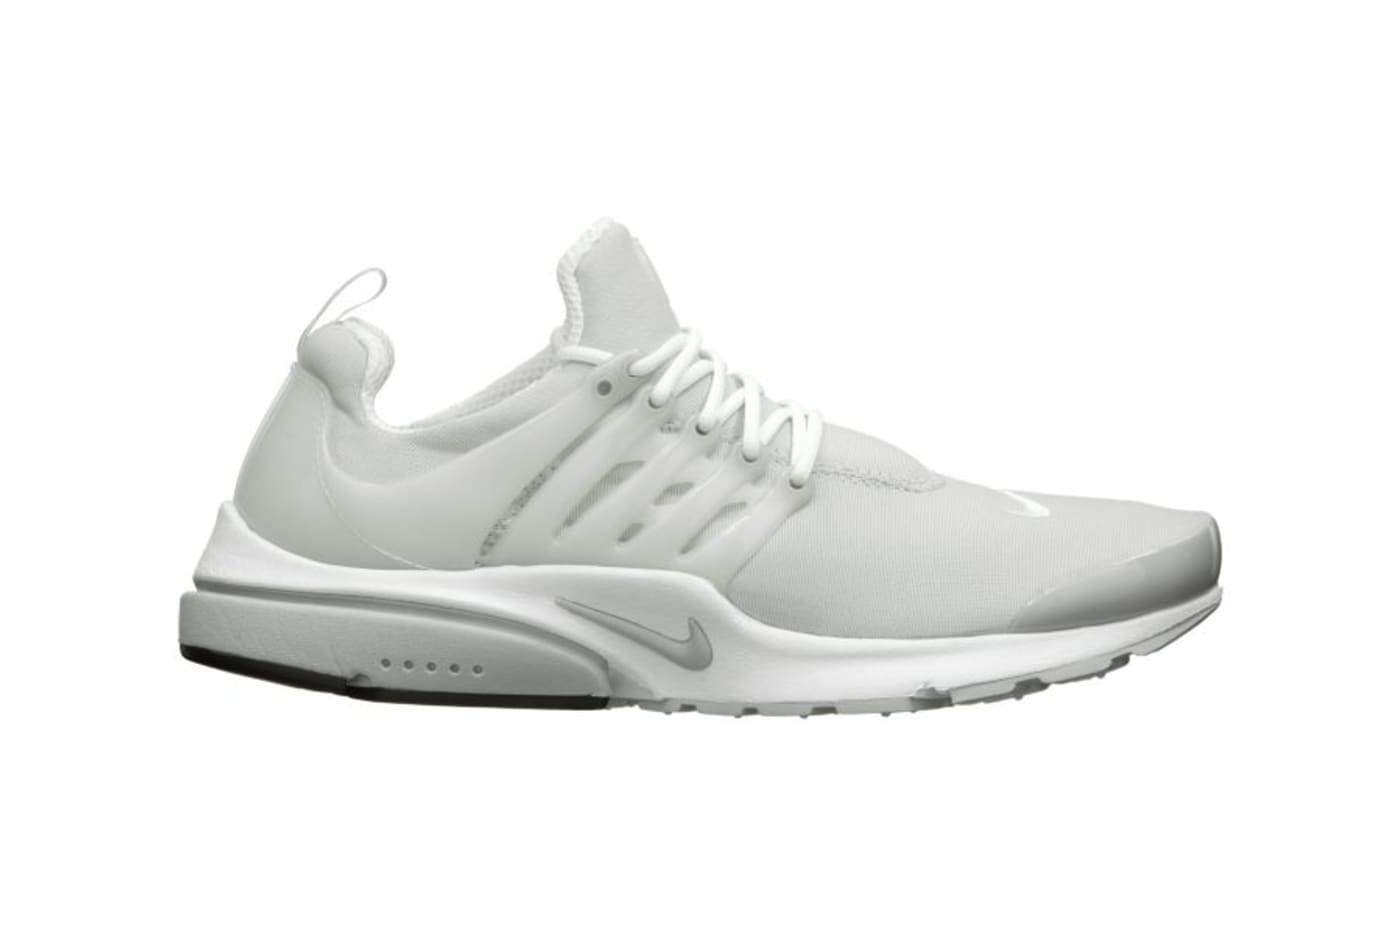 Kicks of the Nike Presto “Light Zen Grey/White” Complex